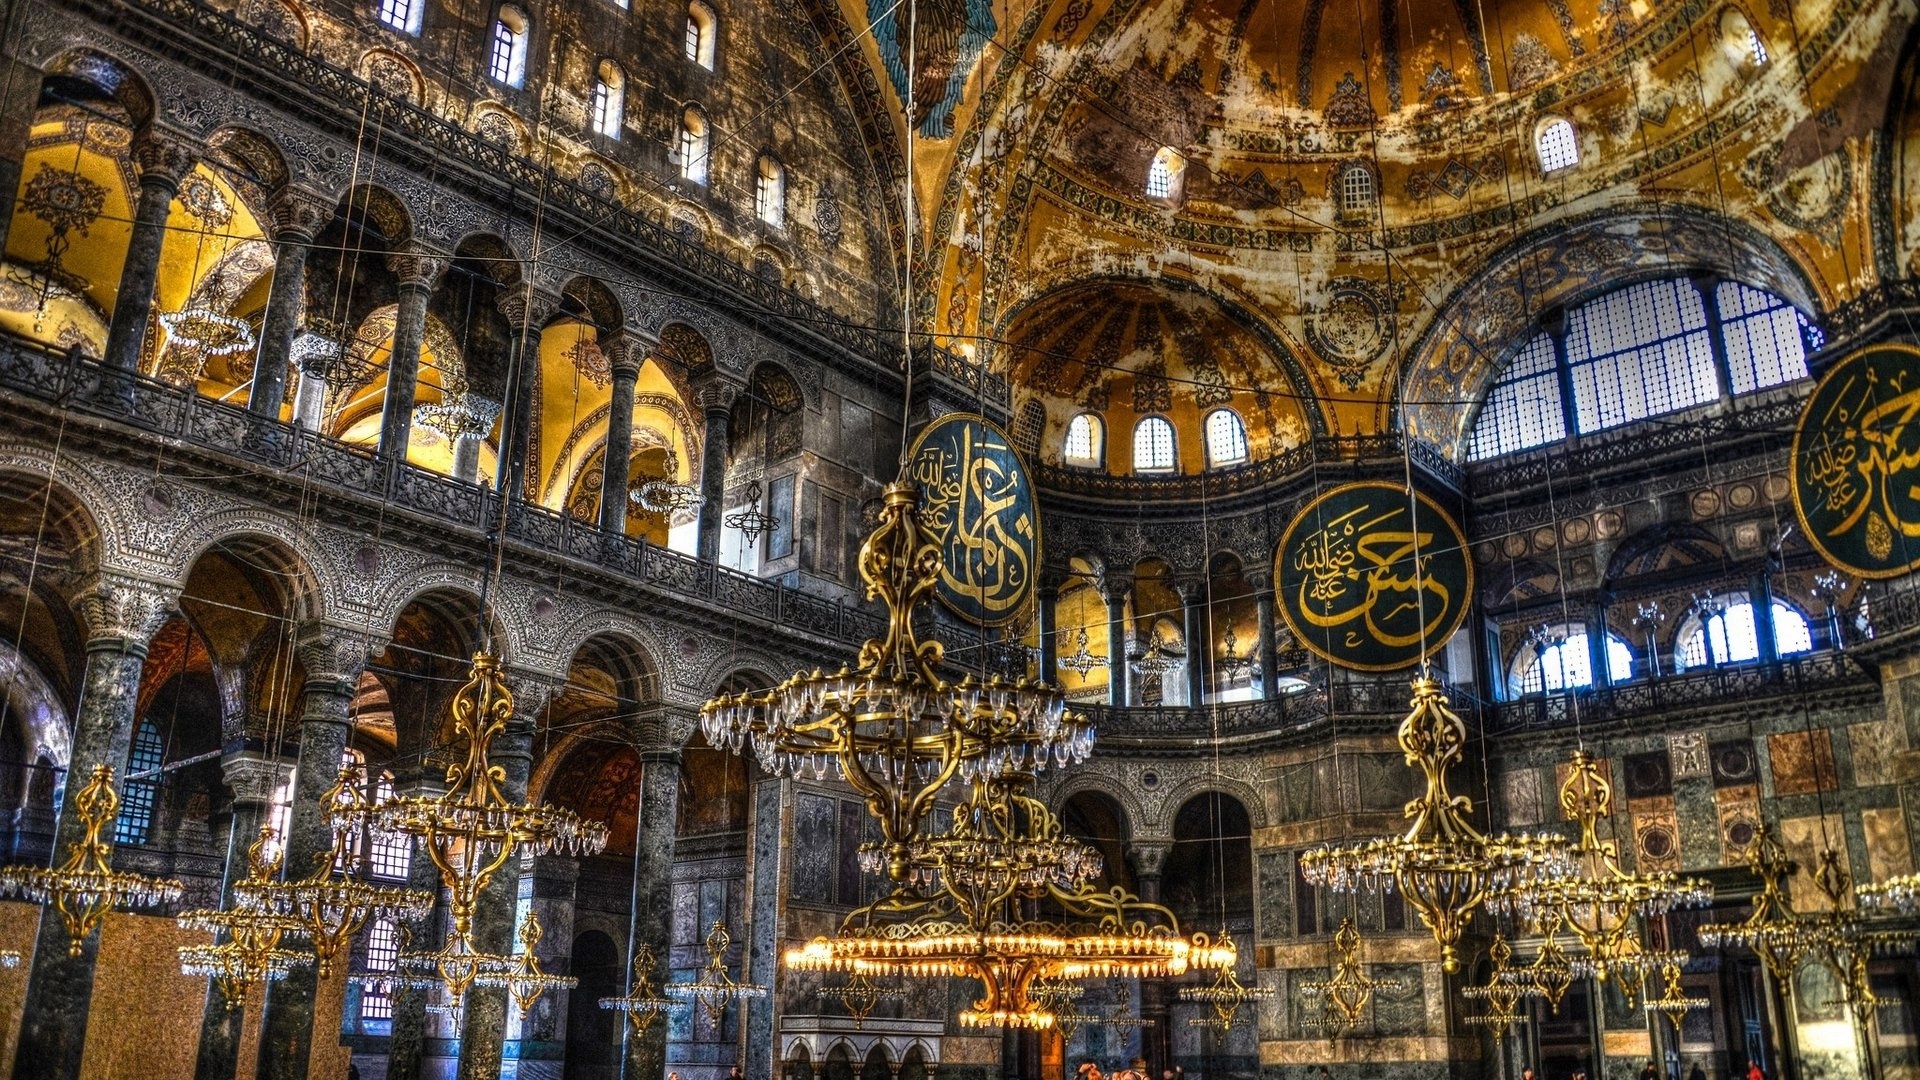 Hagia Sophia, HD wallpapers, Beautiful backgrounds, Architectural beauty, 1920x1080 Full HD Desktop